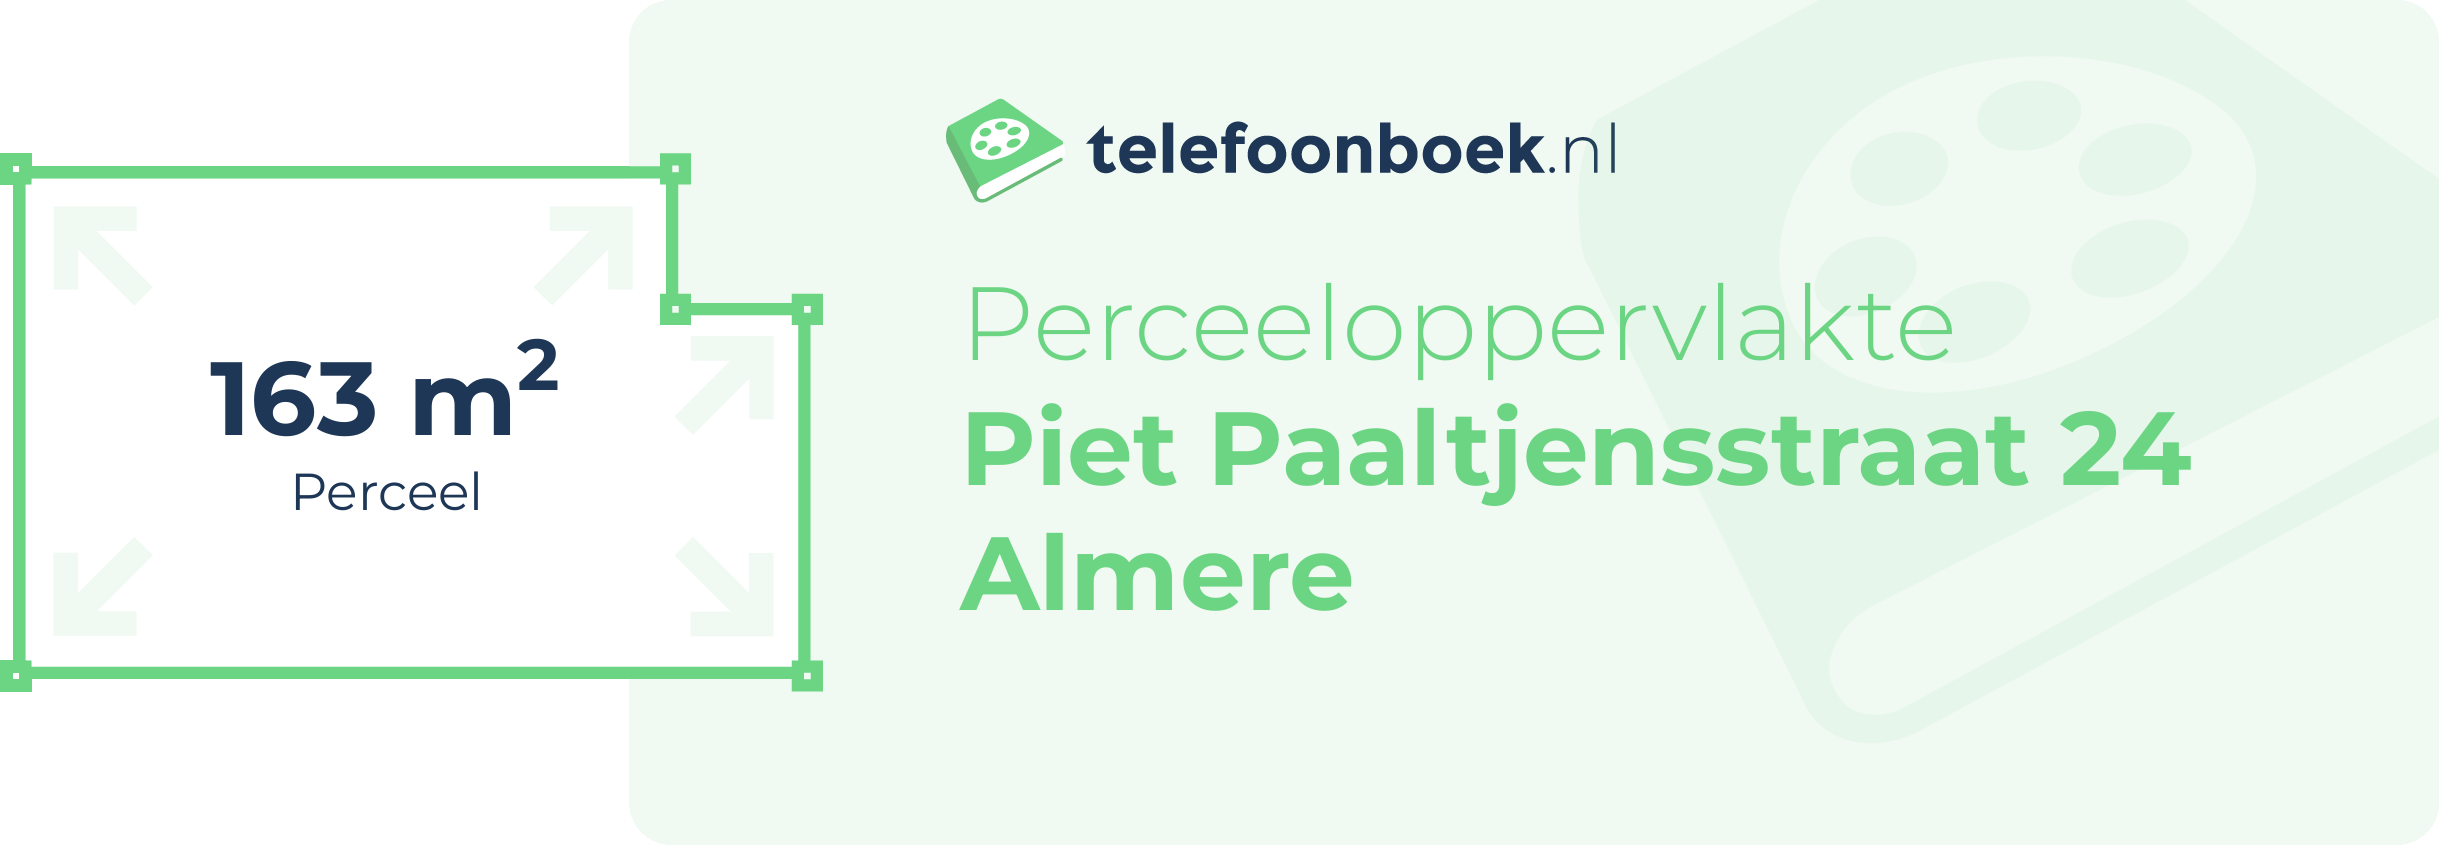 Perceeloppervlakte Piet Paaltjensstraat 24 Almere